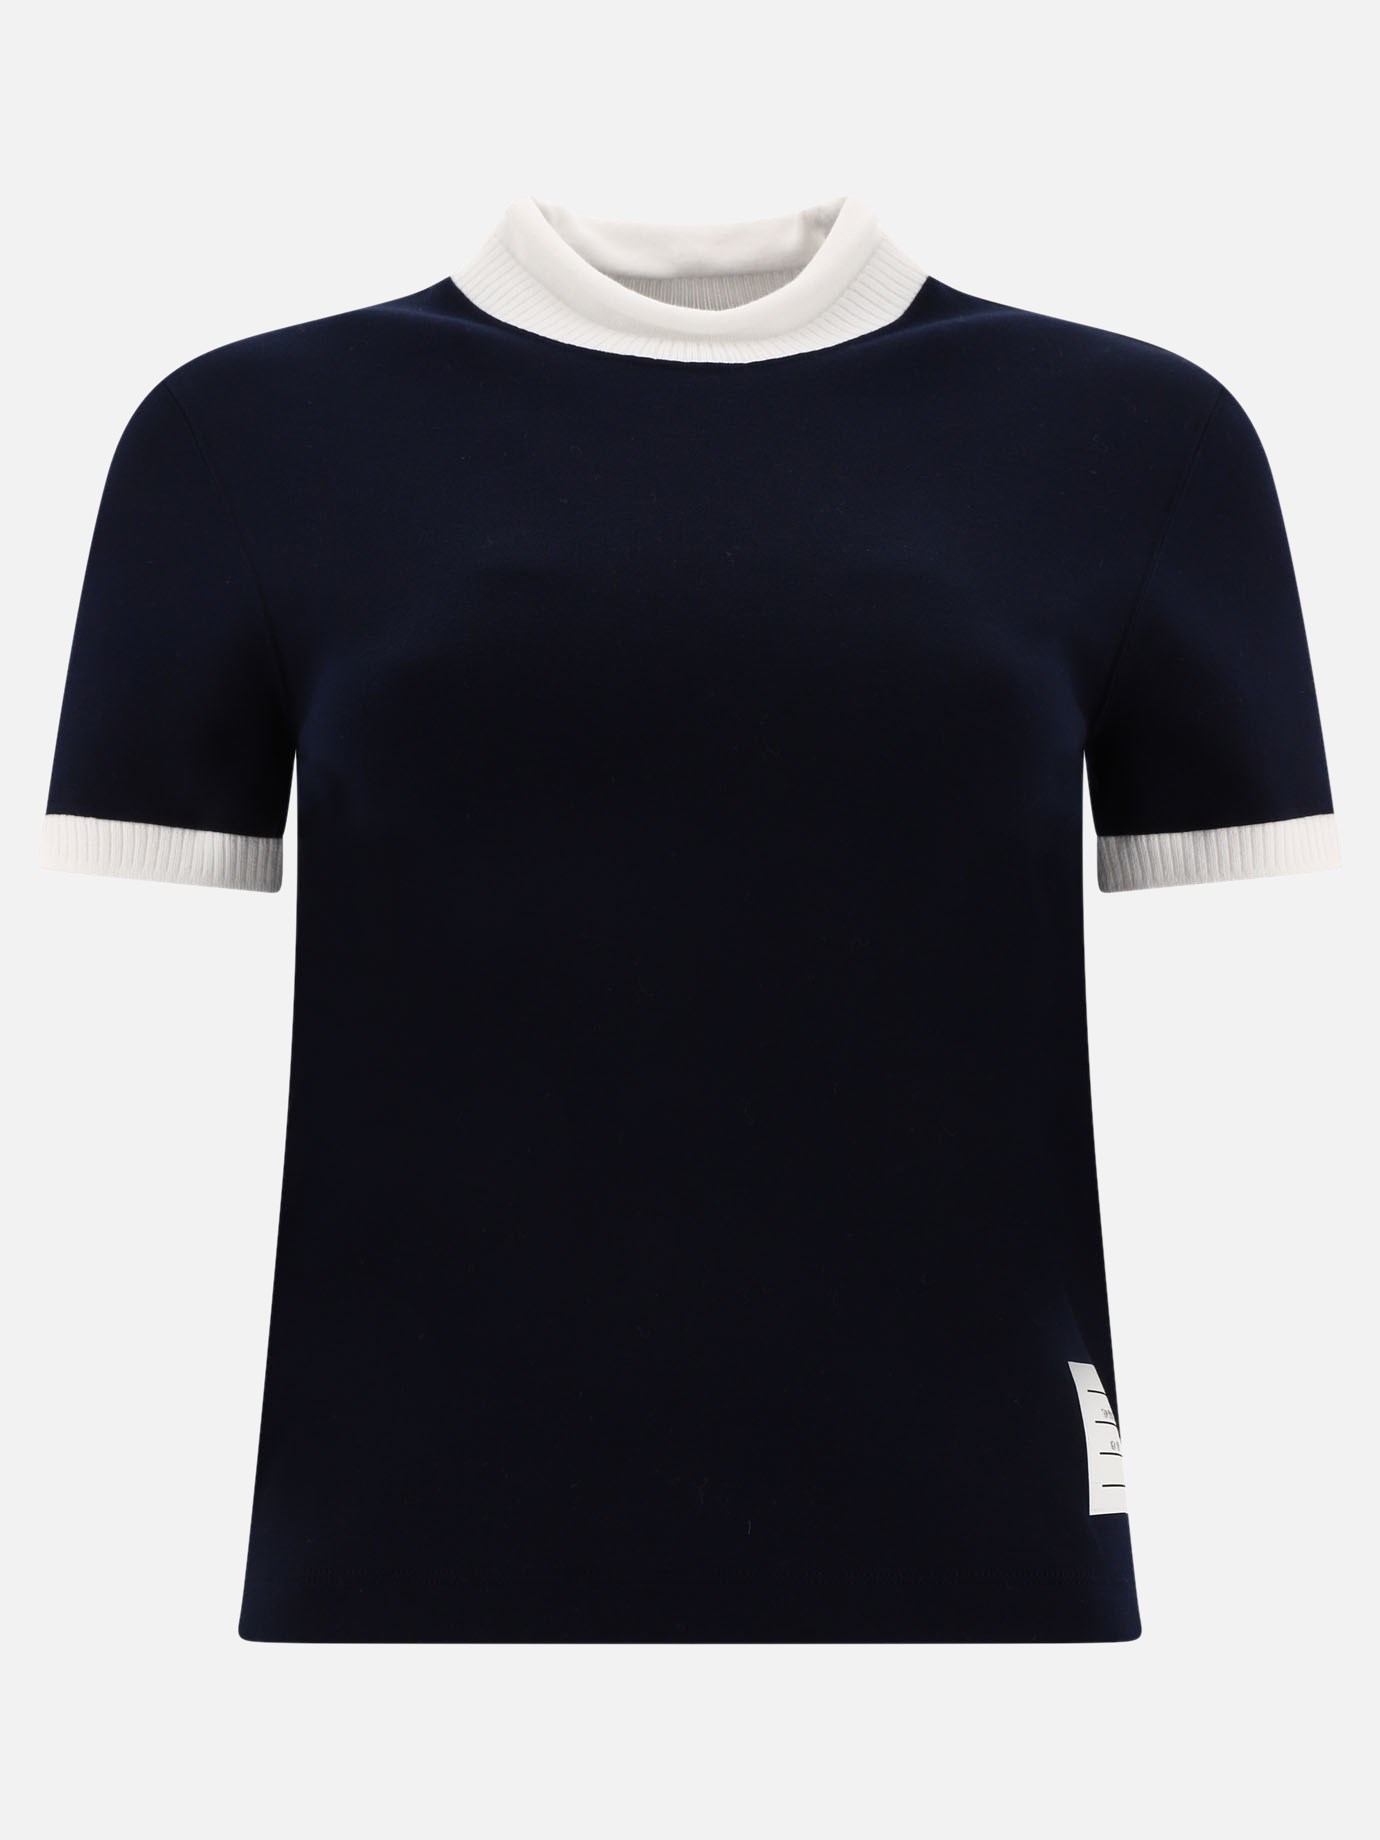  Ribbed-edge  t-shirtby Thom Browne - 4